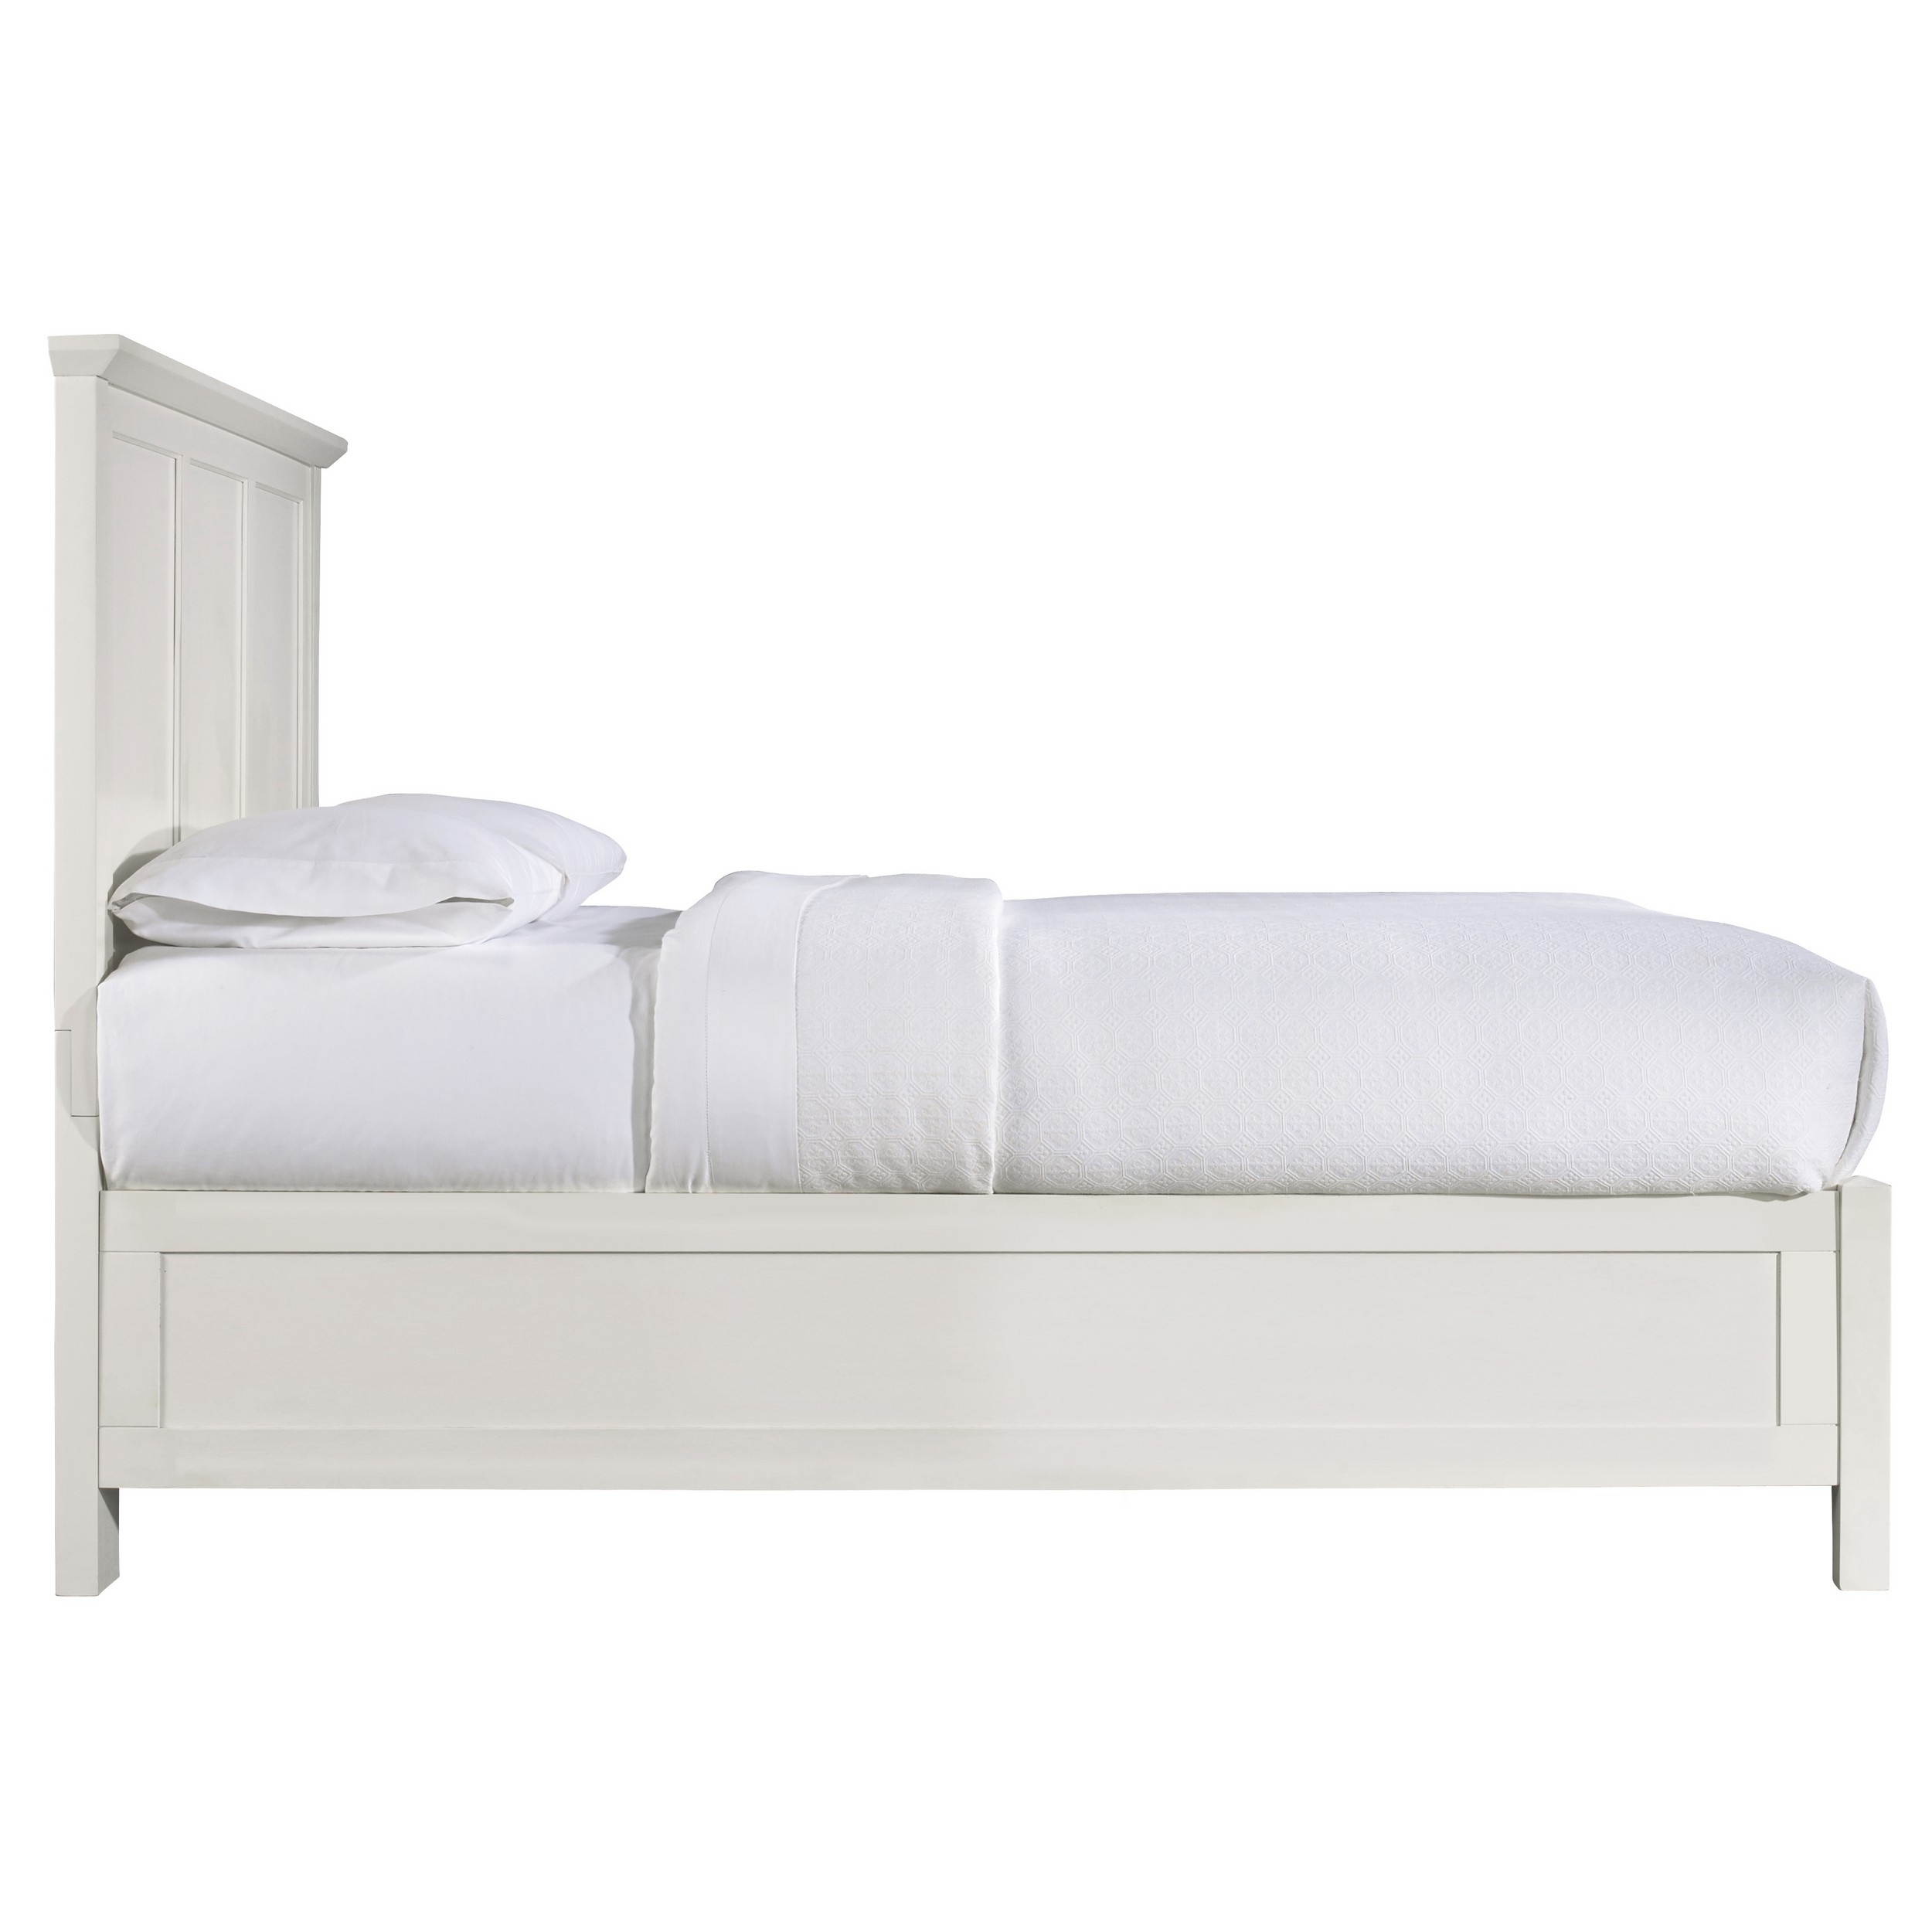 Neo Full Size Bed, Panel Design Farmhouse Wood Frame With Slats, White- Saltoro Sherpi